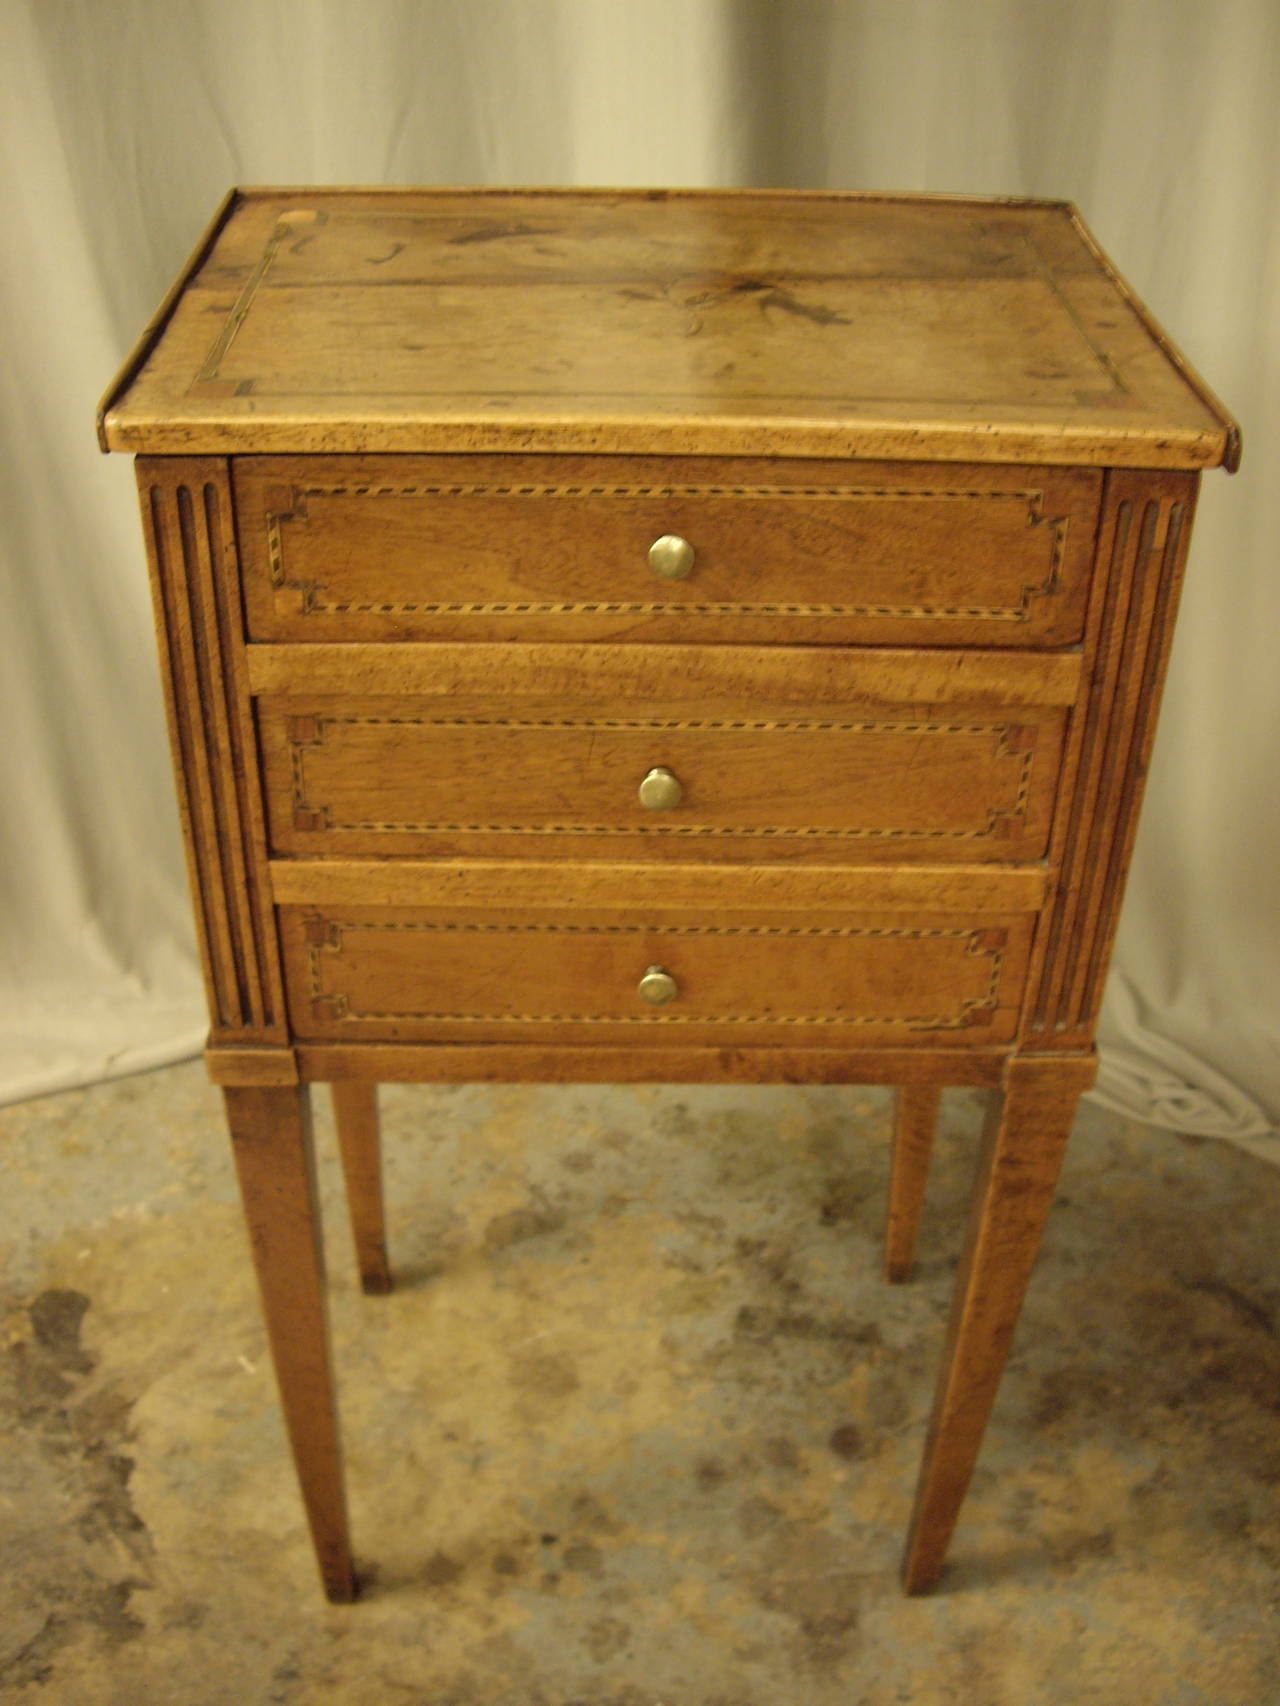 19th century walnut inlaid Louis XVI side table with very nice warm patina.